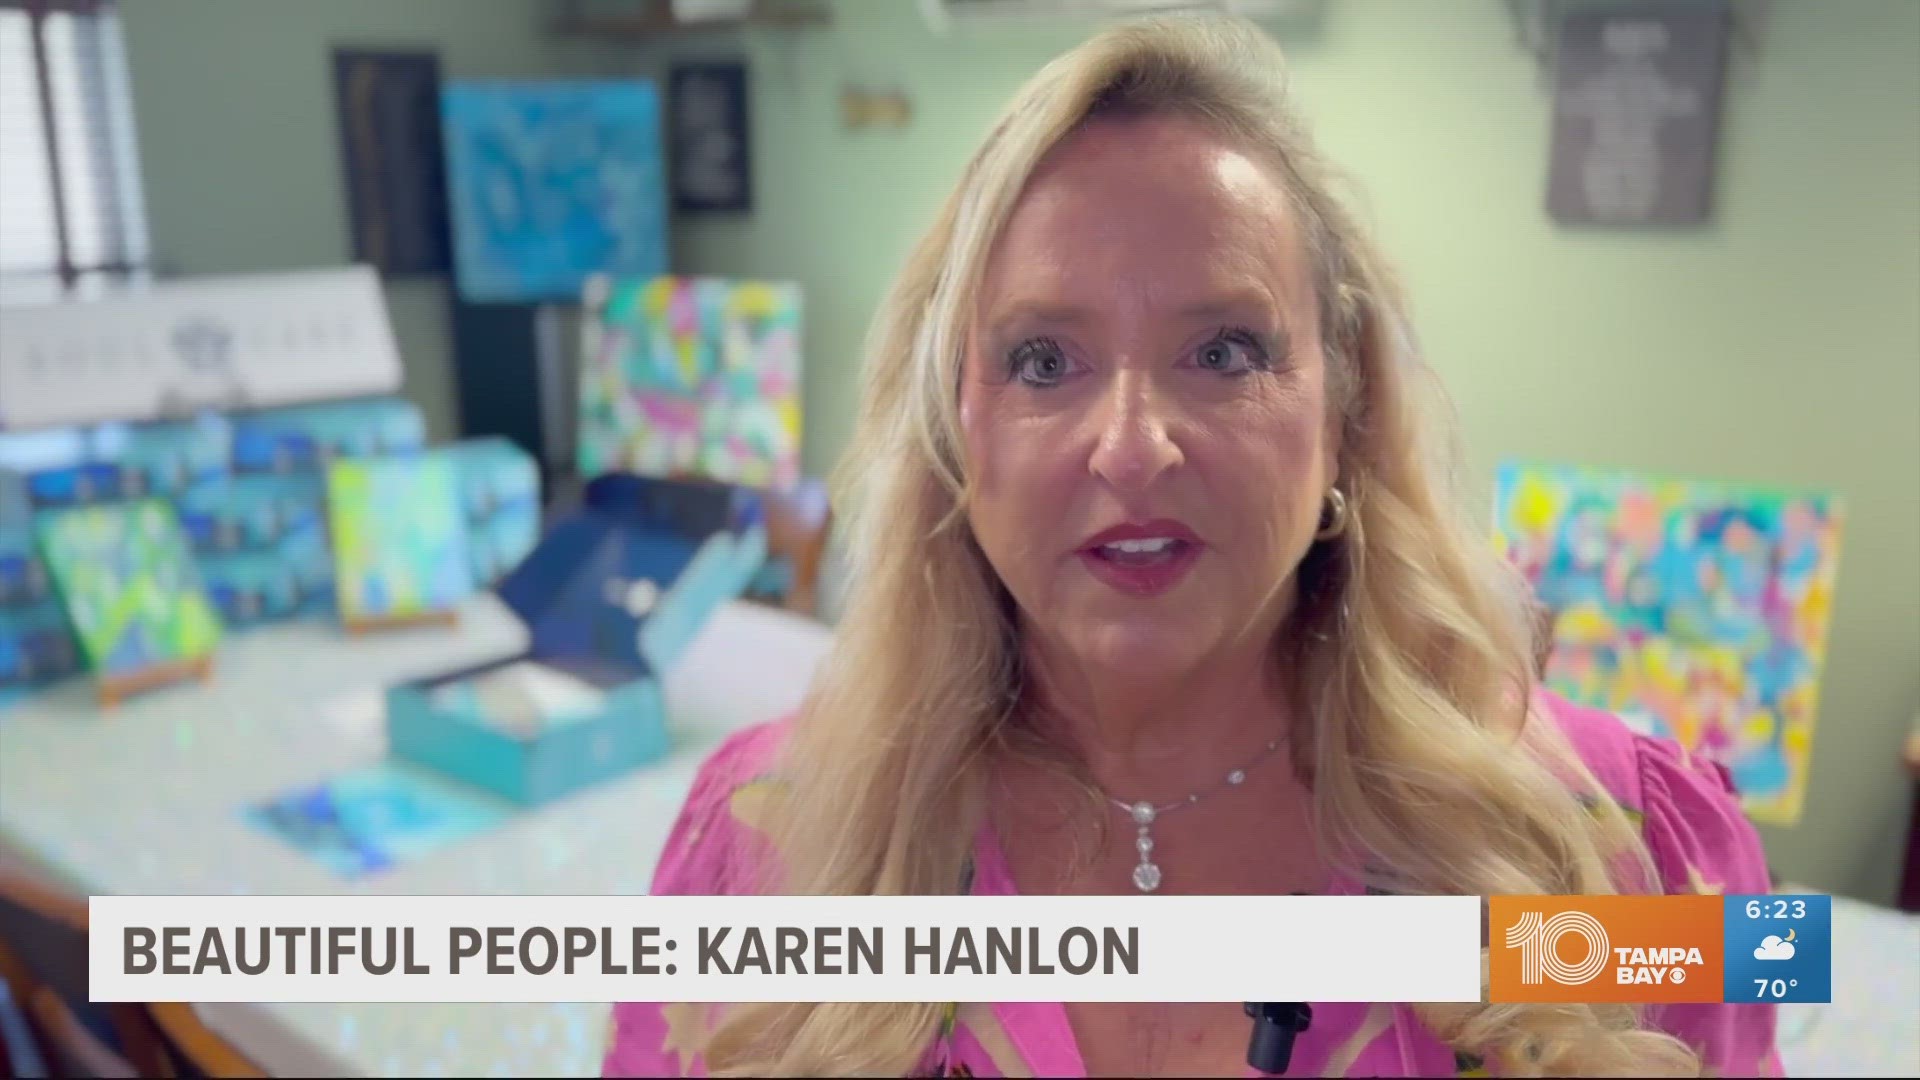 Karen Hanlon offers therapy through art.